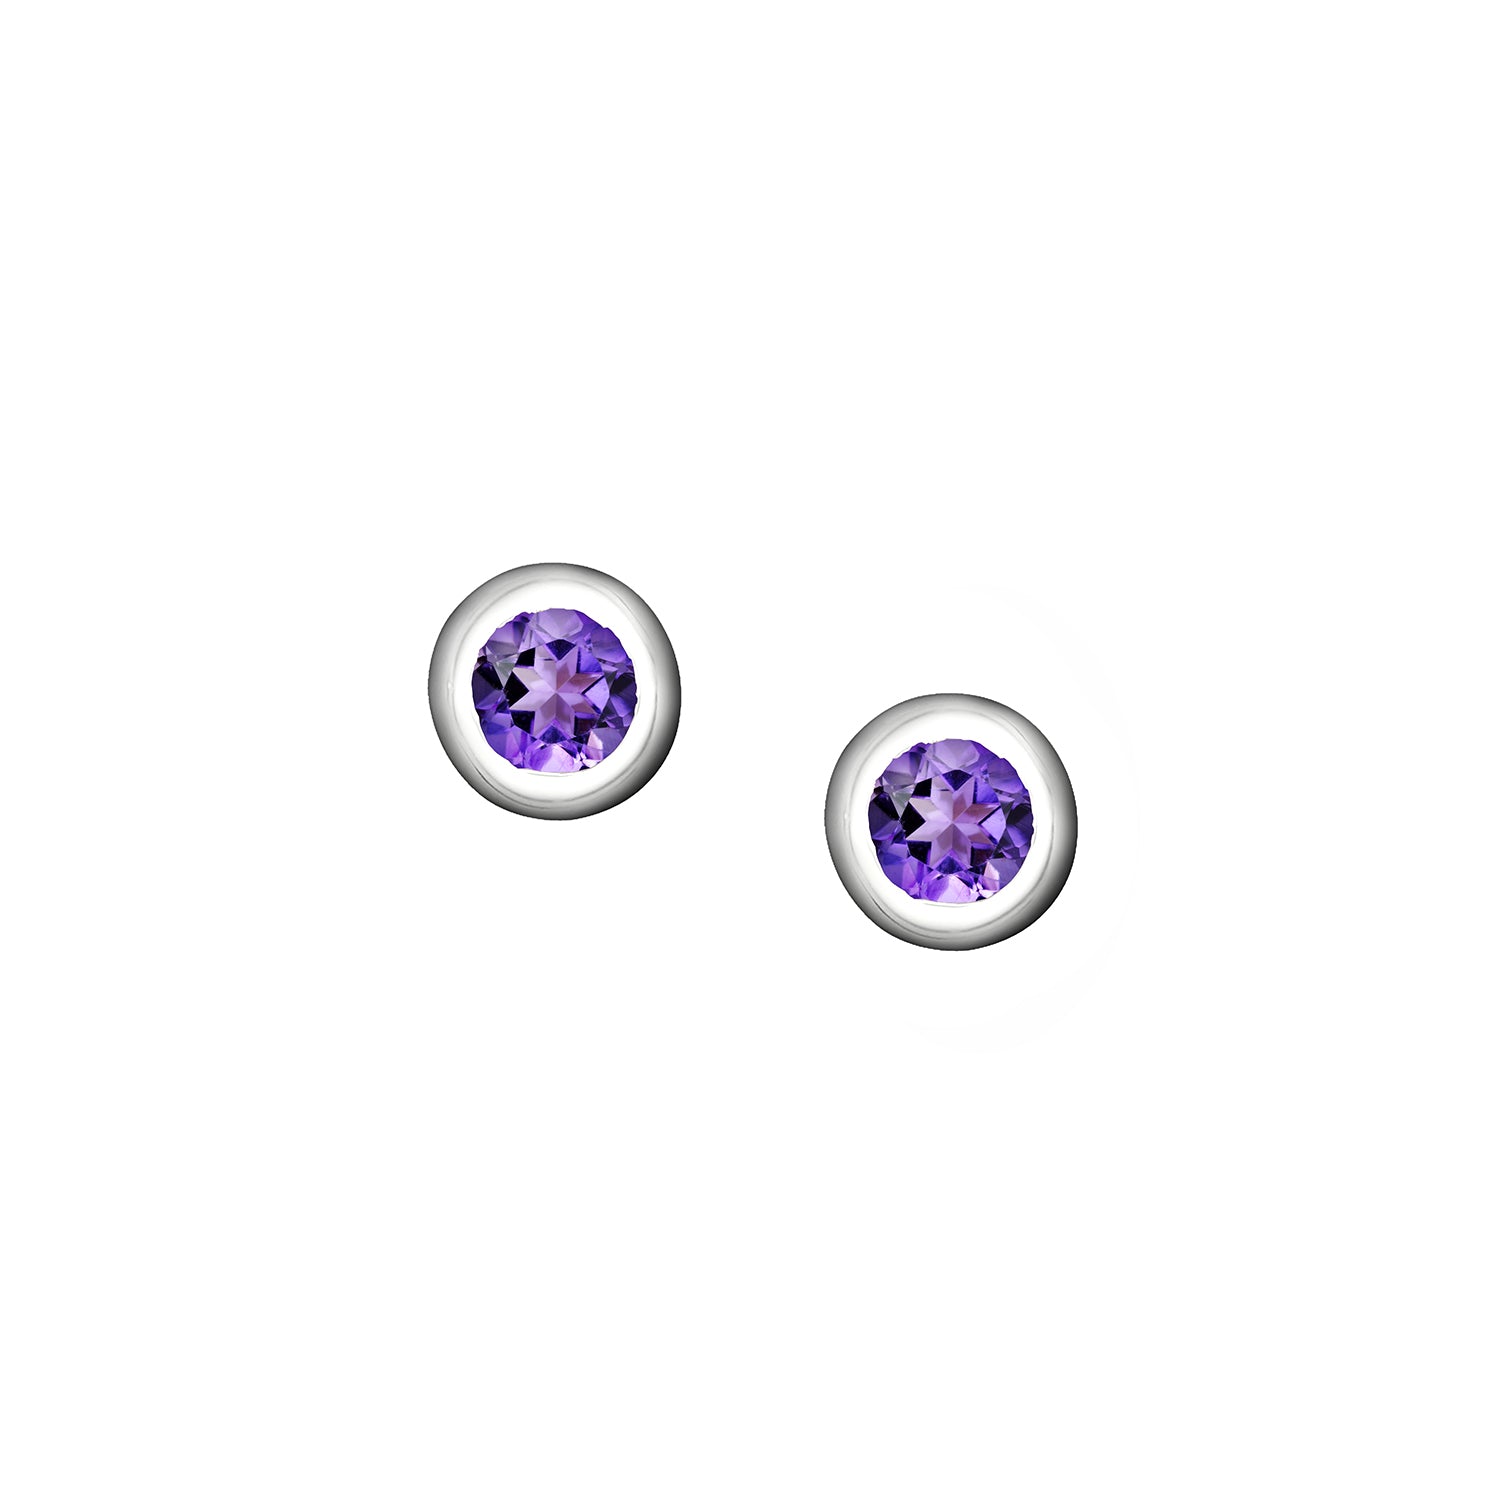 Polished Silver Crescent Moon Birthstone Earrings - February / Amethyst